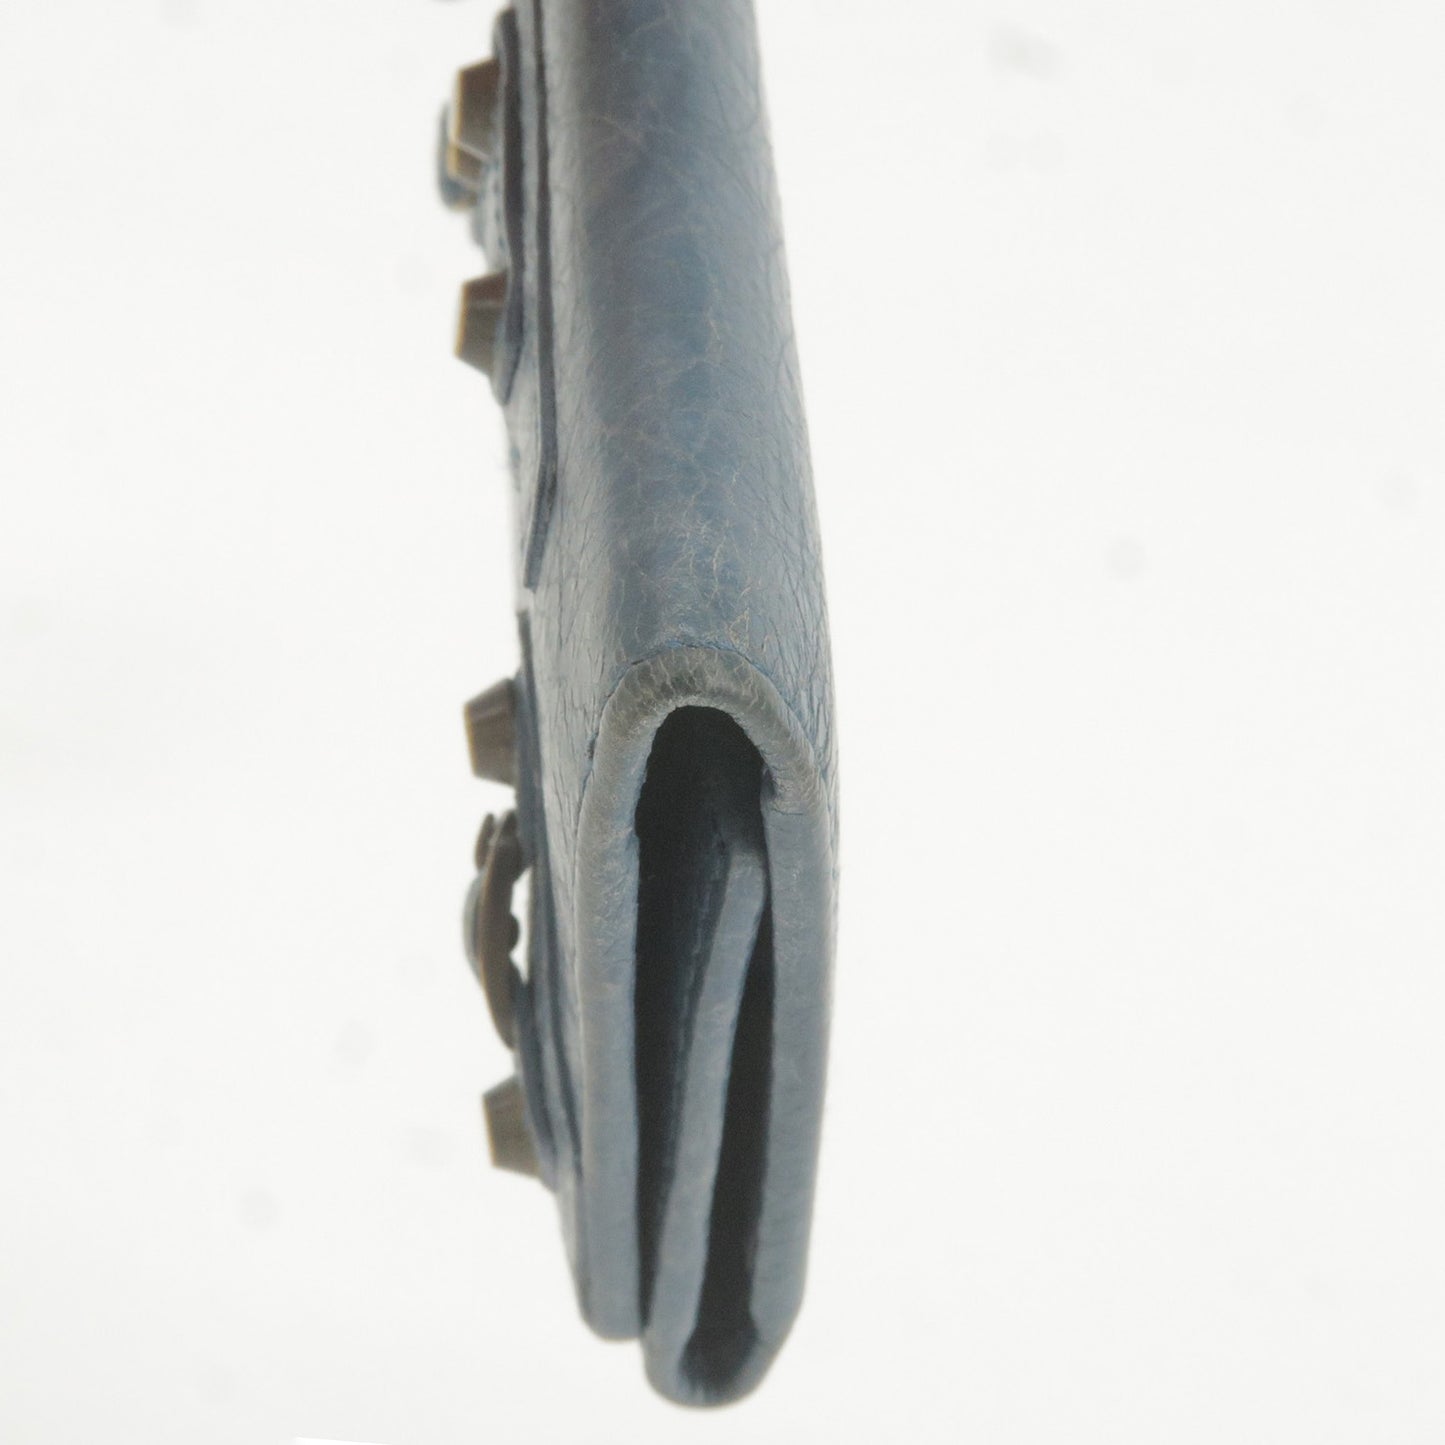 BALENCIAGA Leather Key Case Key Holder Small Leather Good Blue